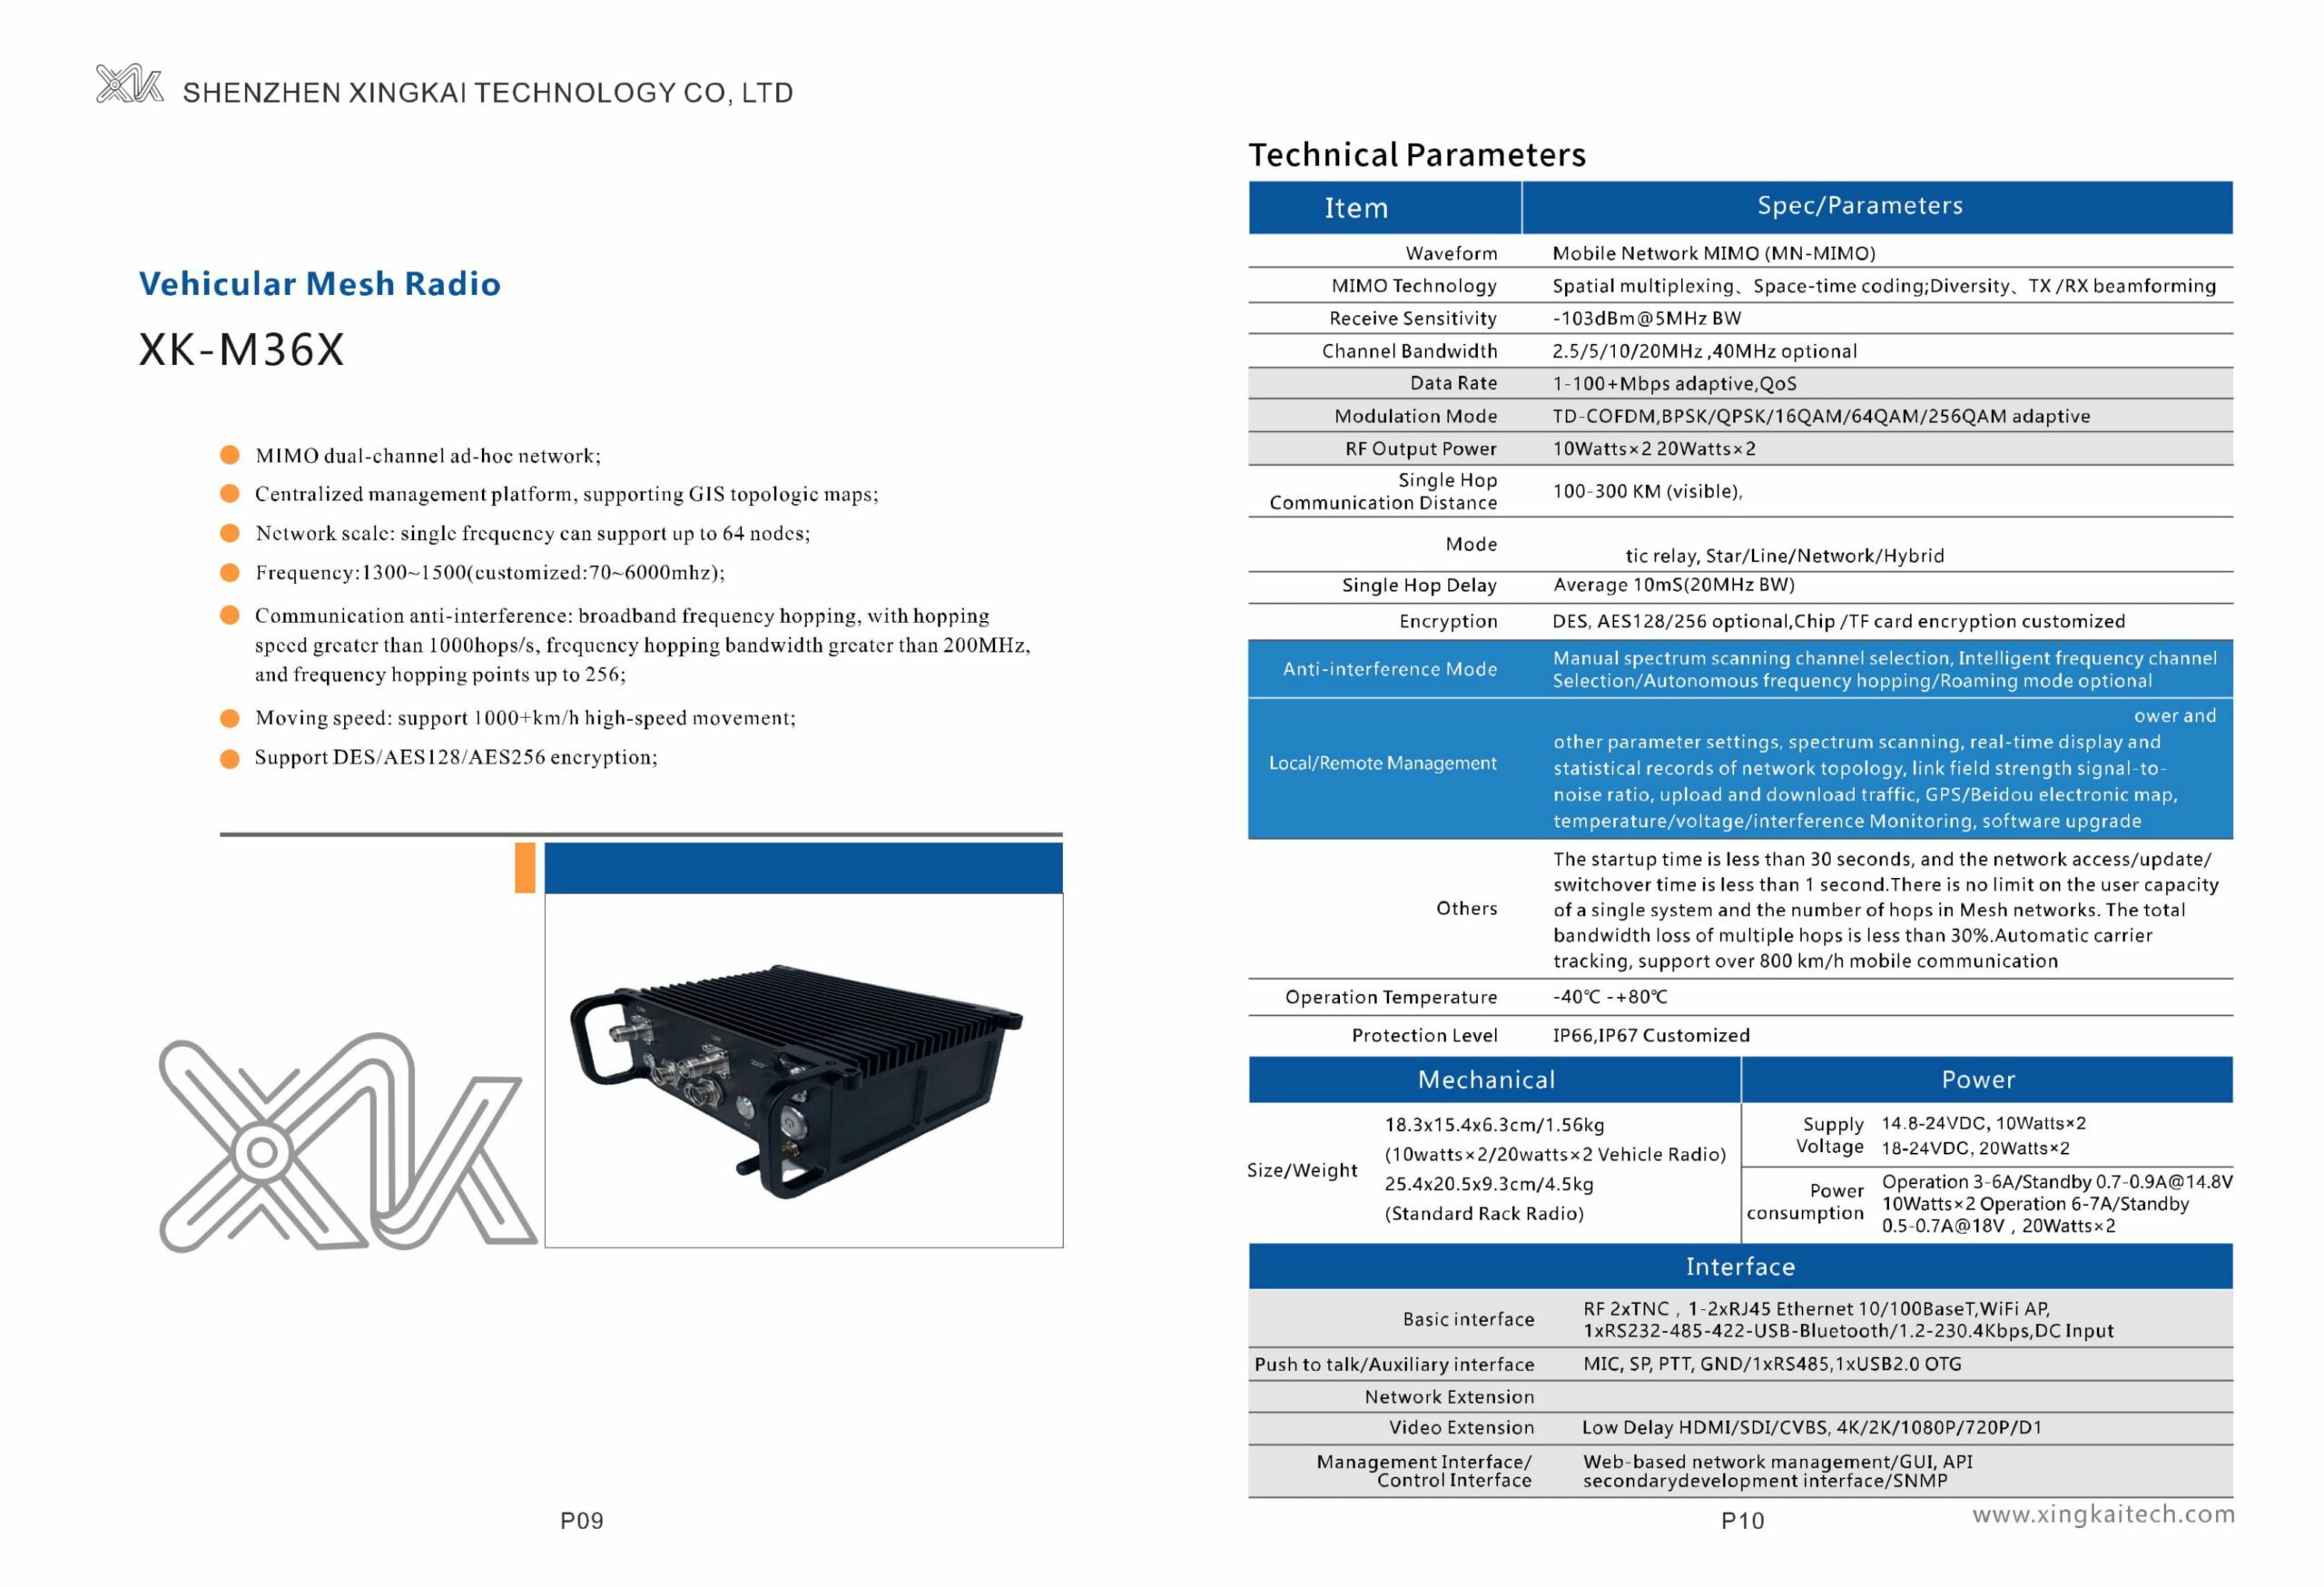 Catalogue Of Shenzhen Xingkai Technology Co. Ltd 06 Scaled